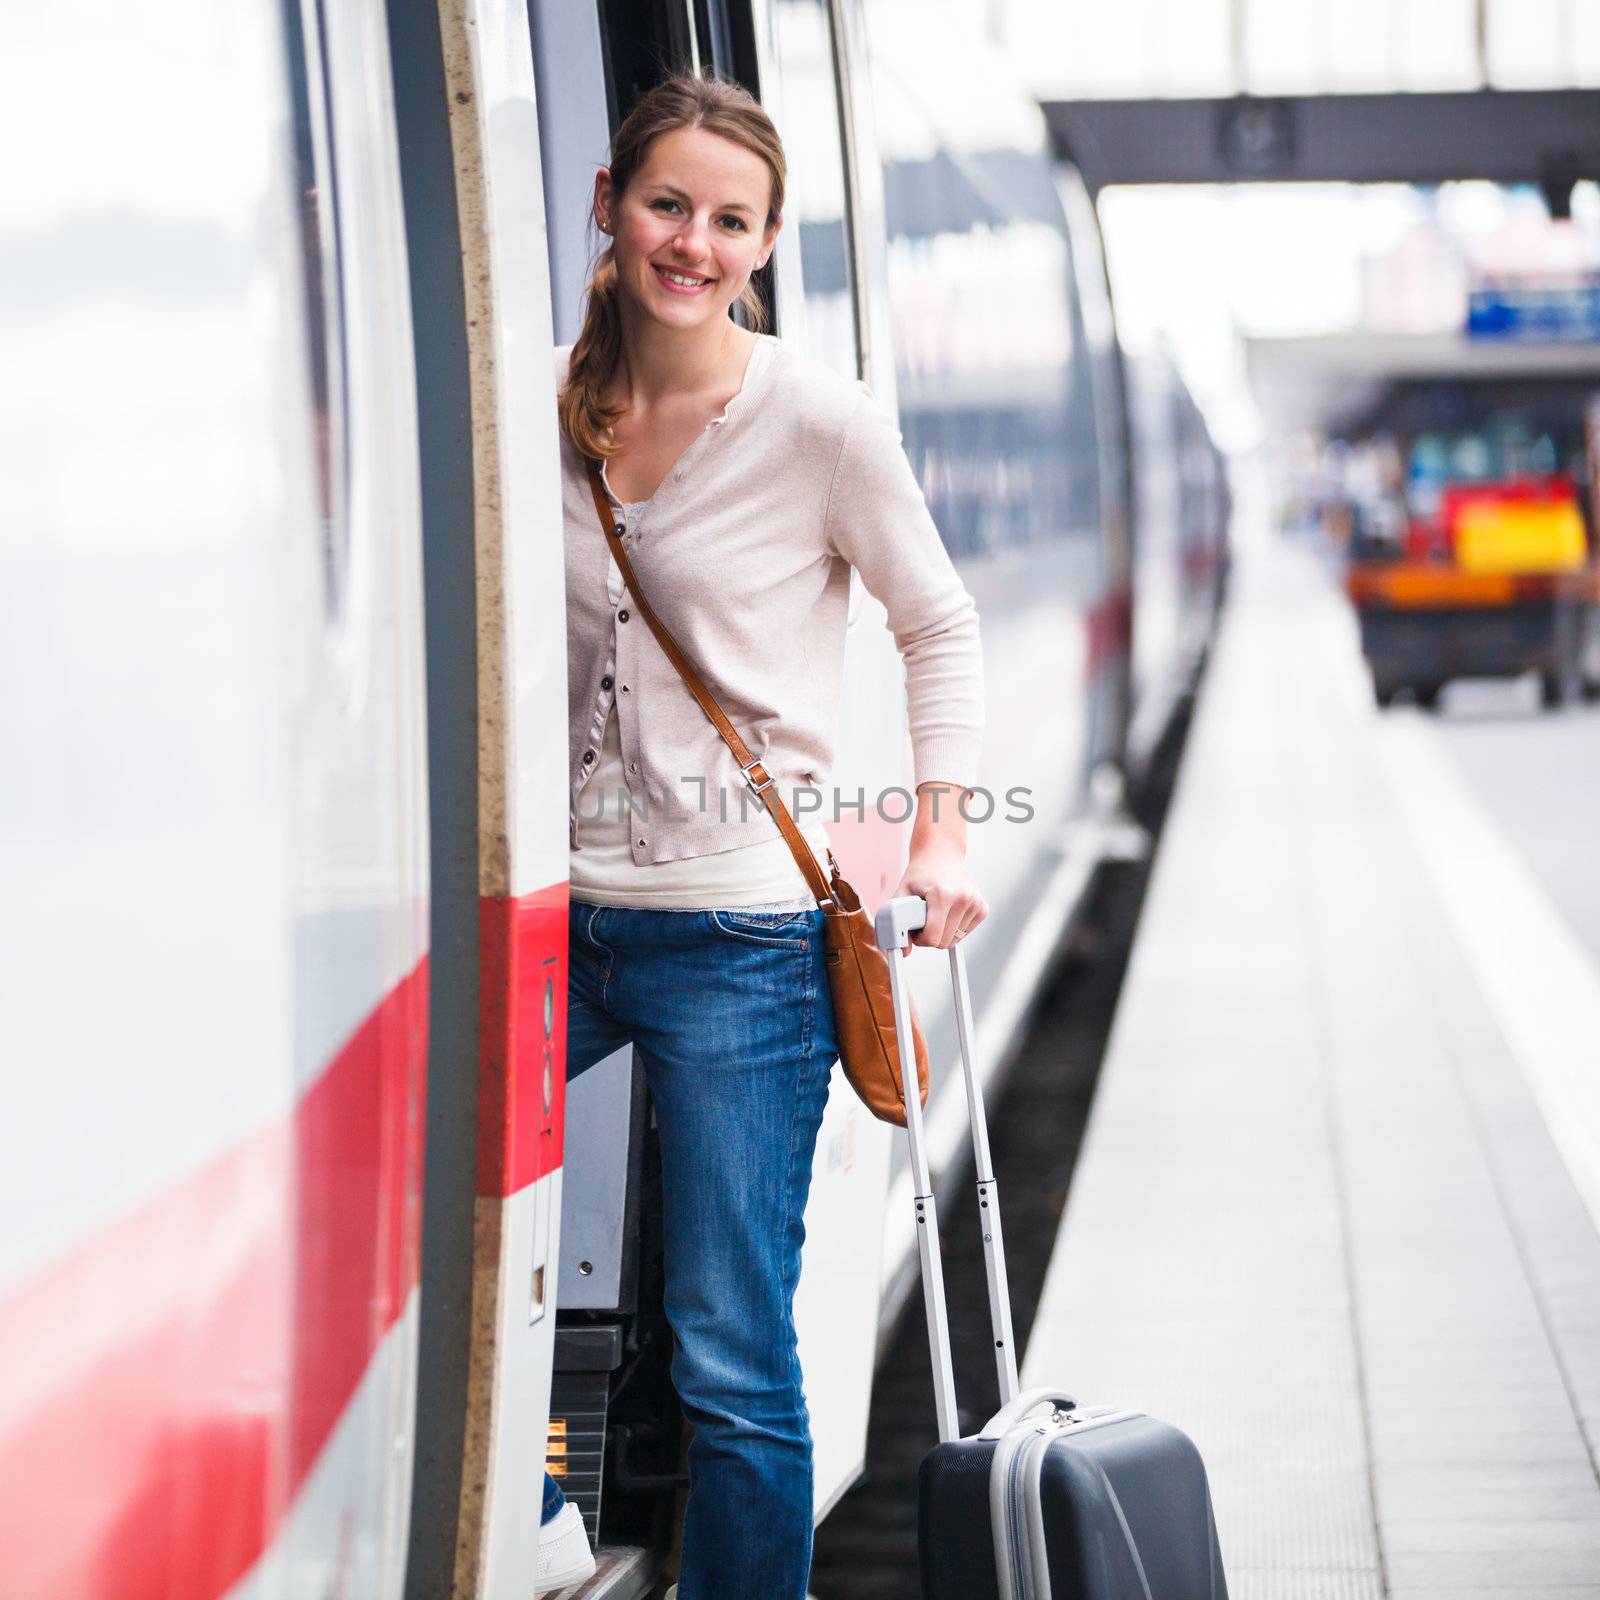 Pretty young woman boarding a train by viktor_cap